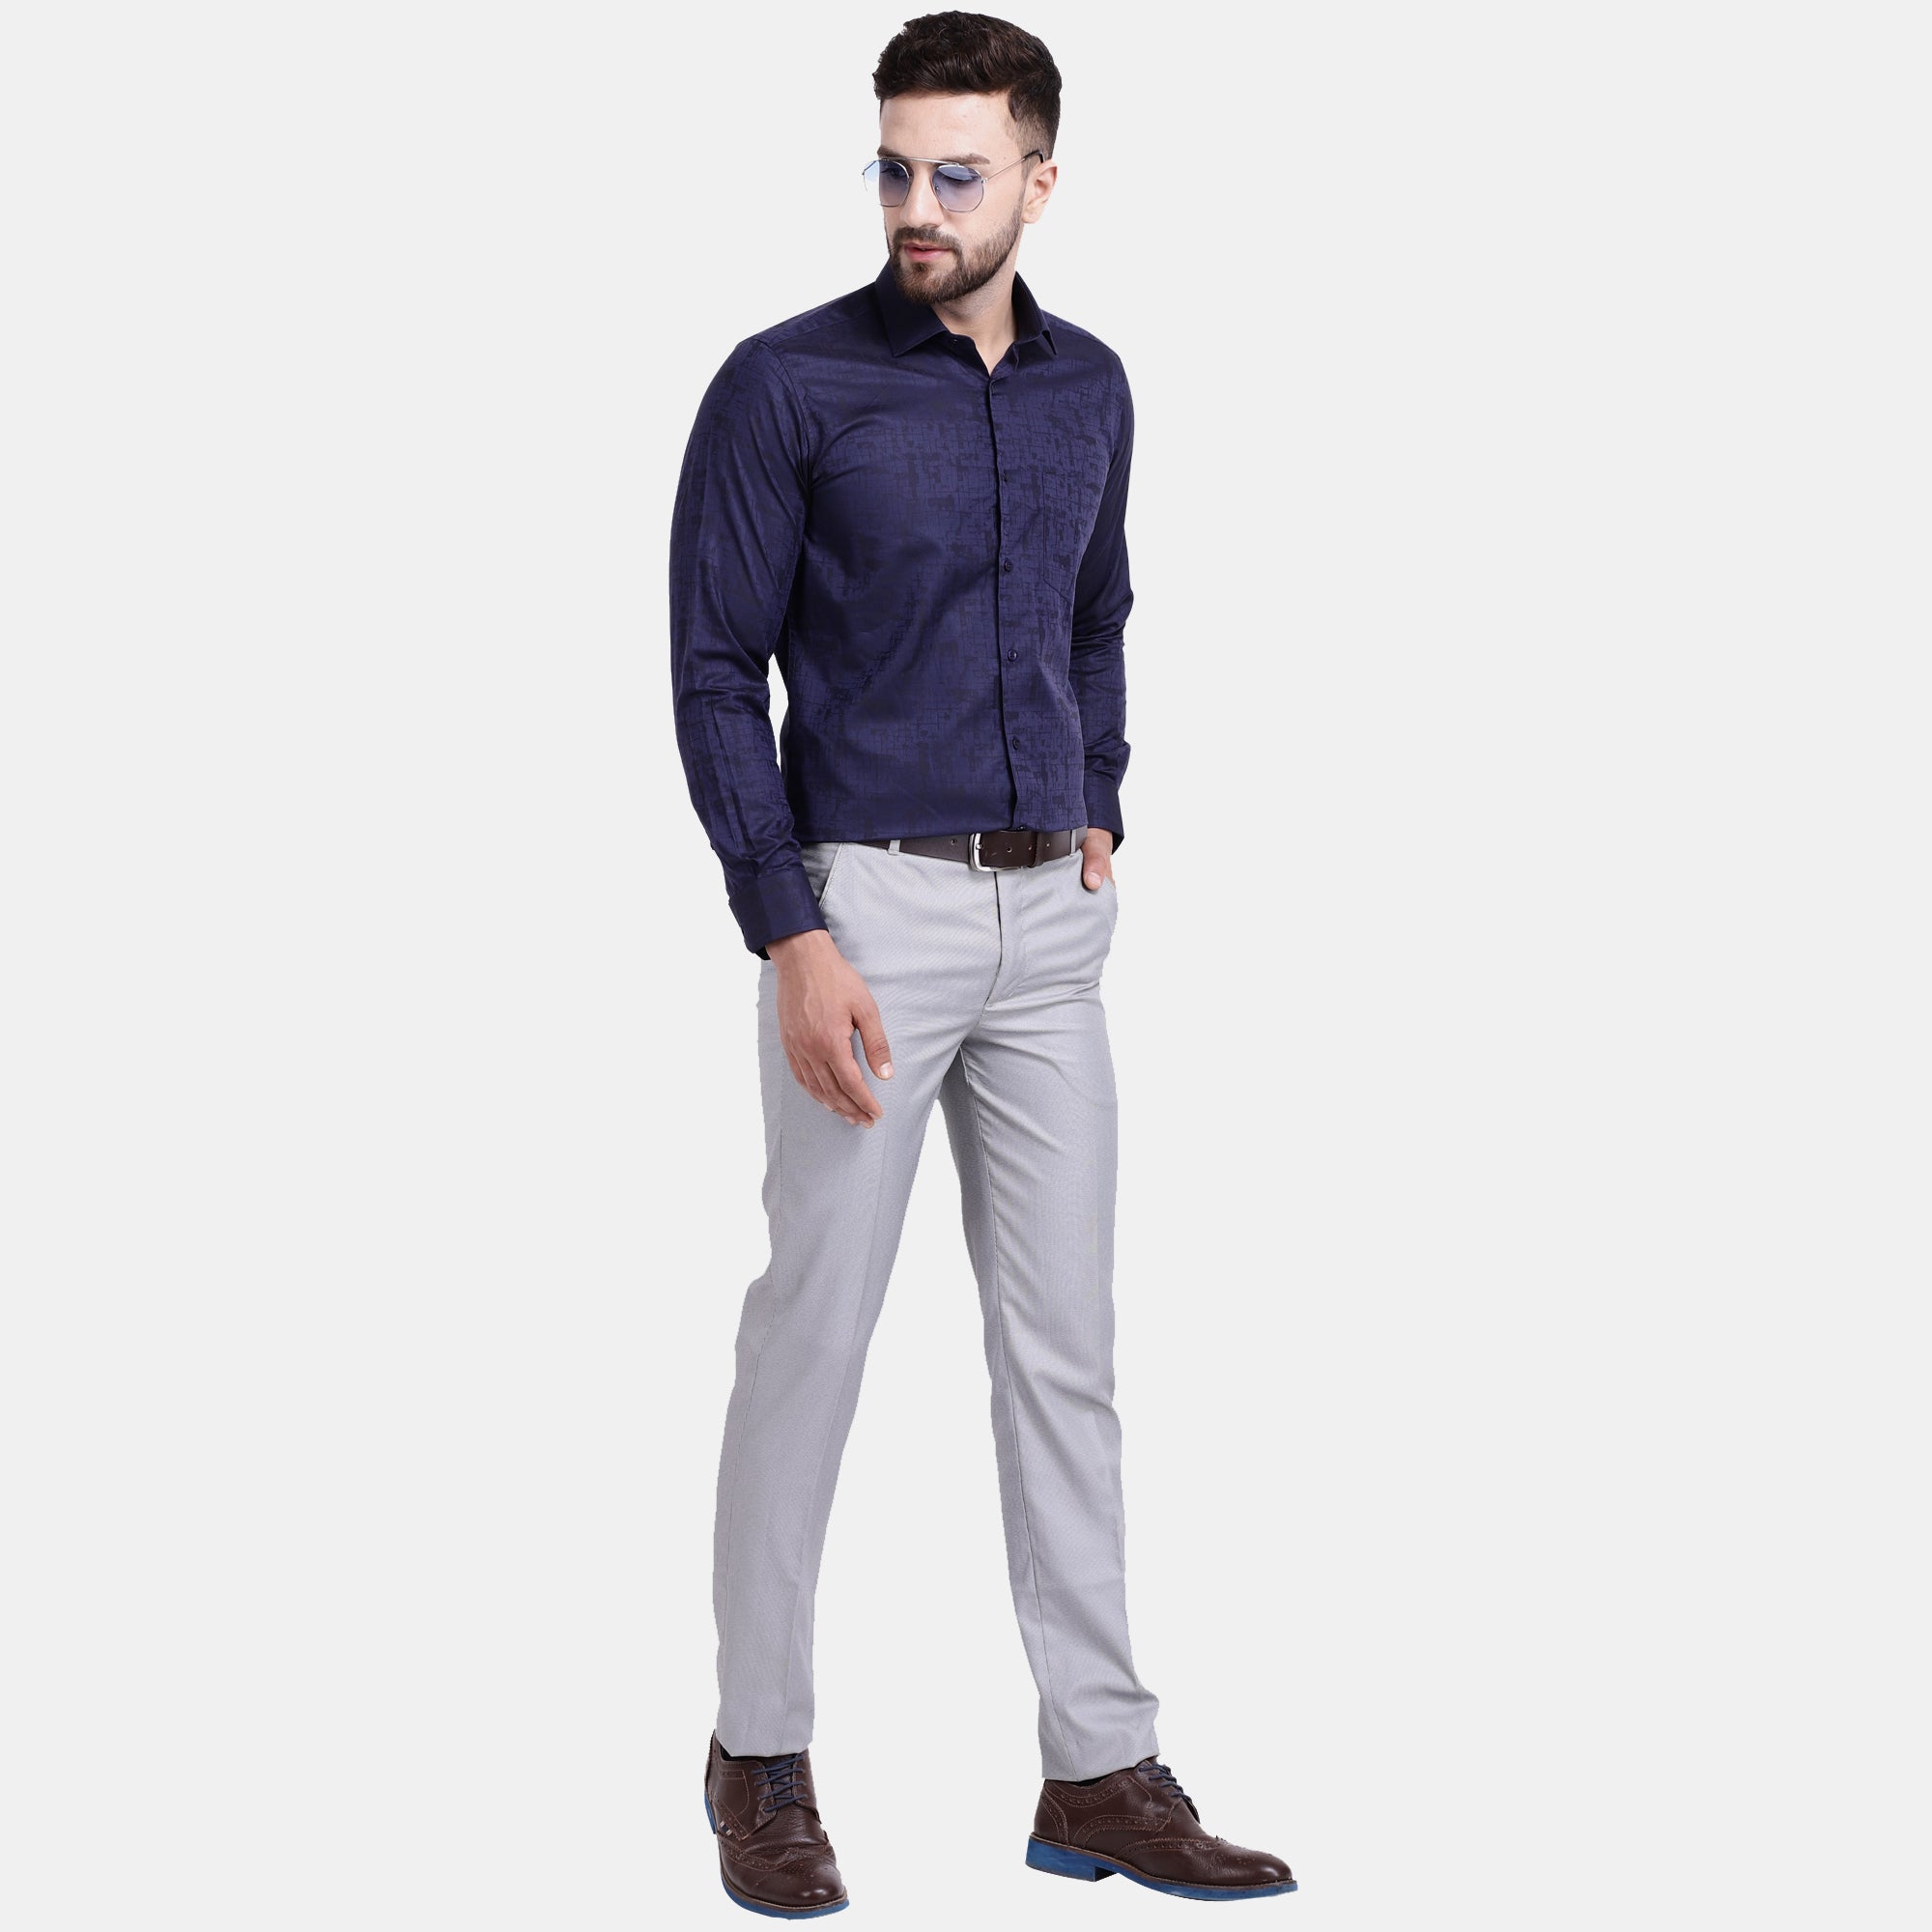 Men's Luthai Supima Mercerised Cotton Subtle Textured Abstract Jacquard Design Regular Fit Shirt